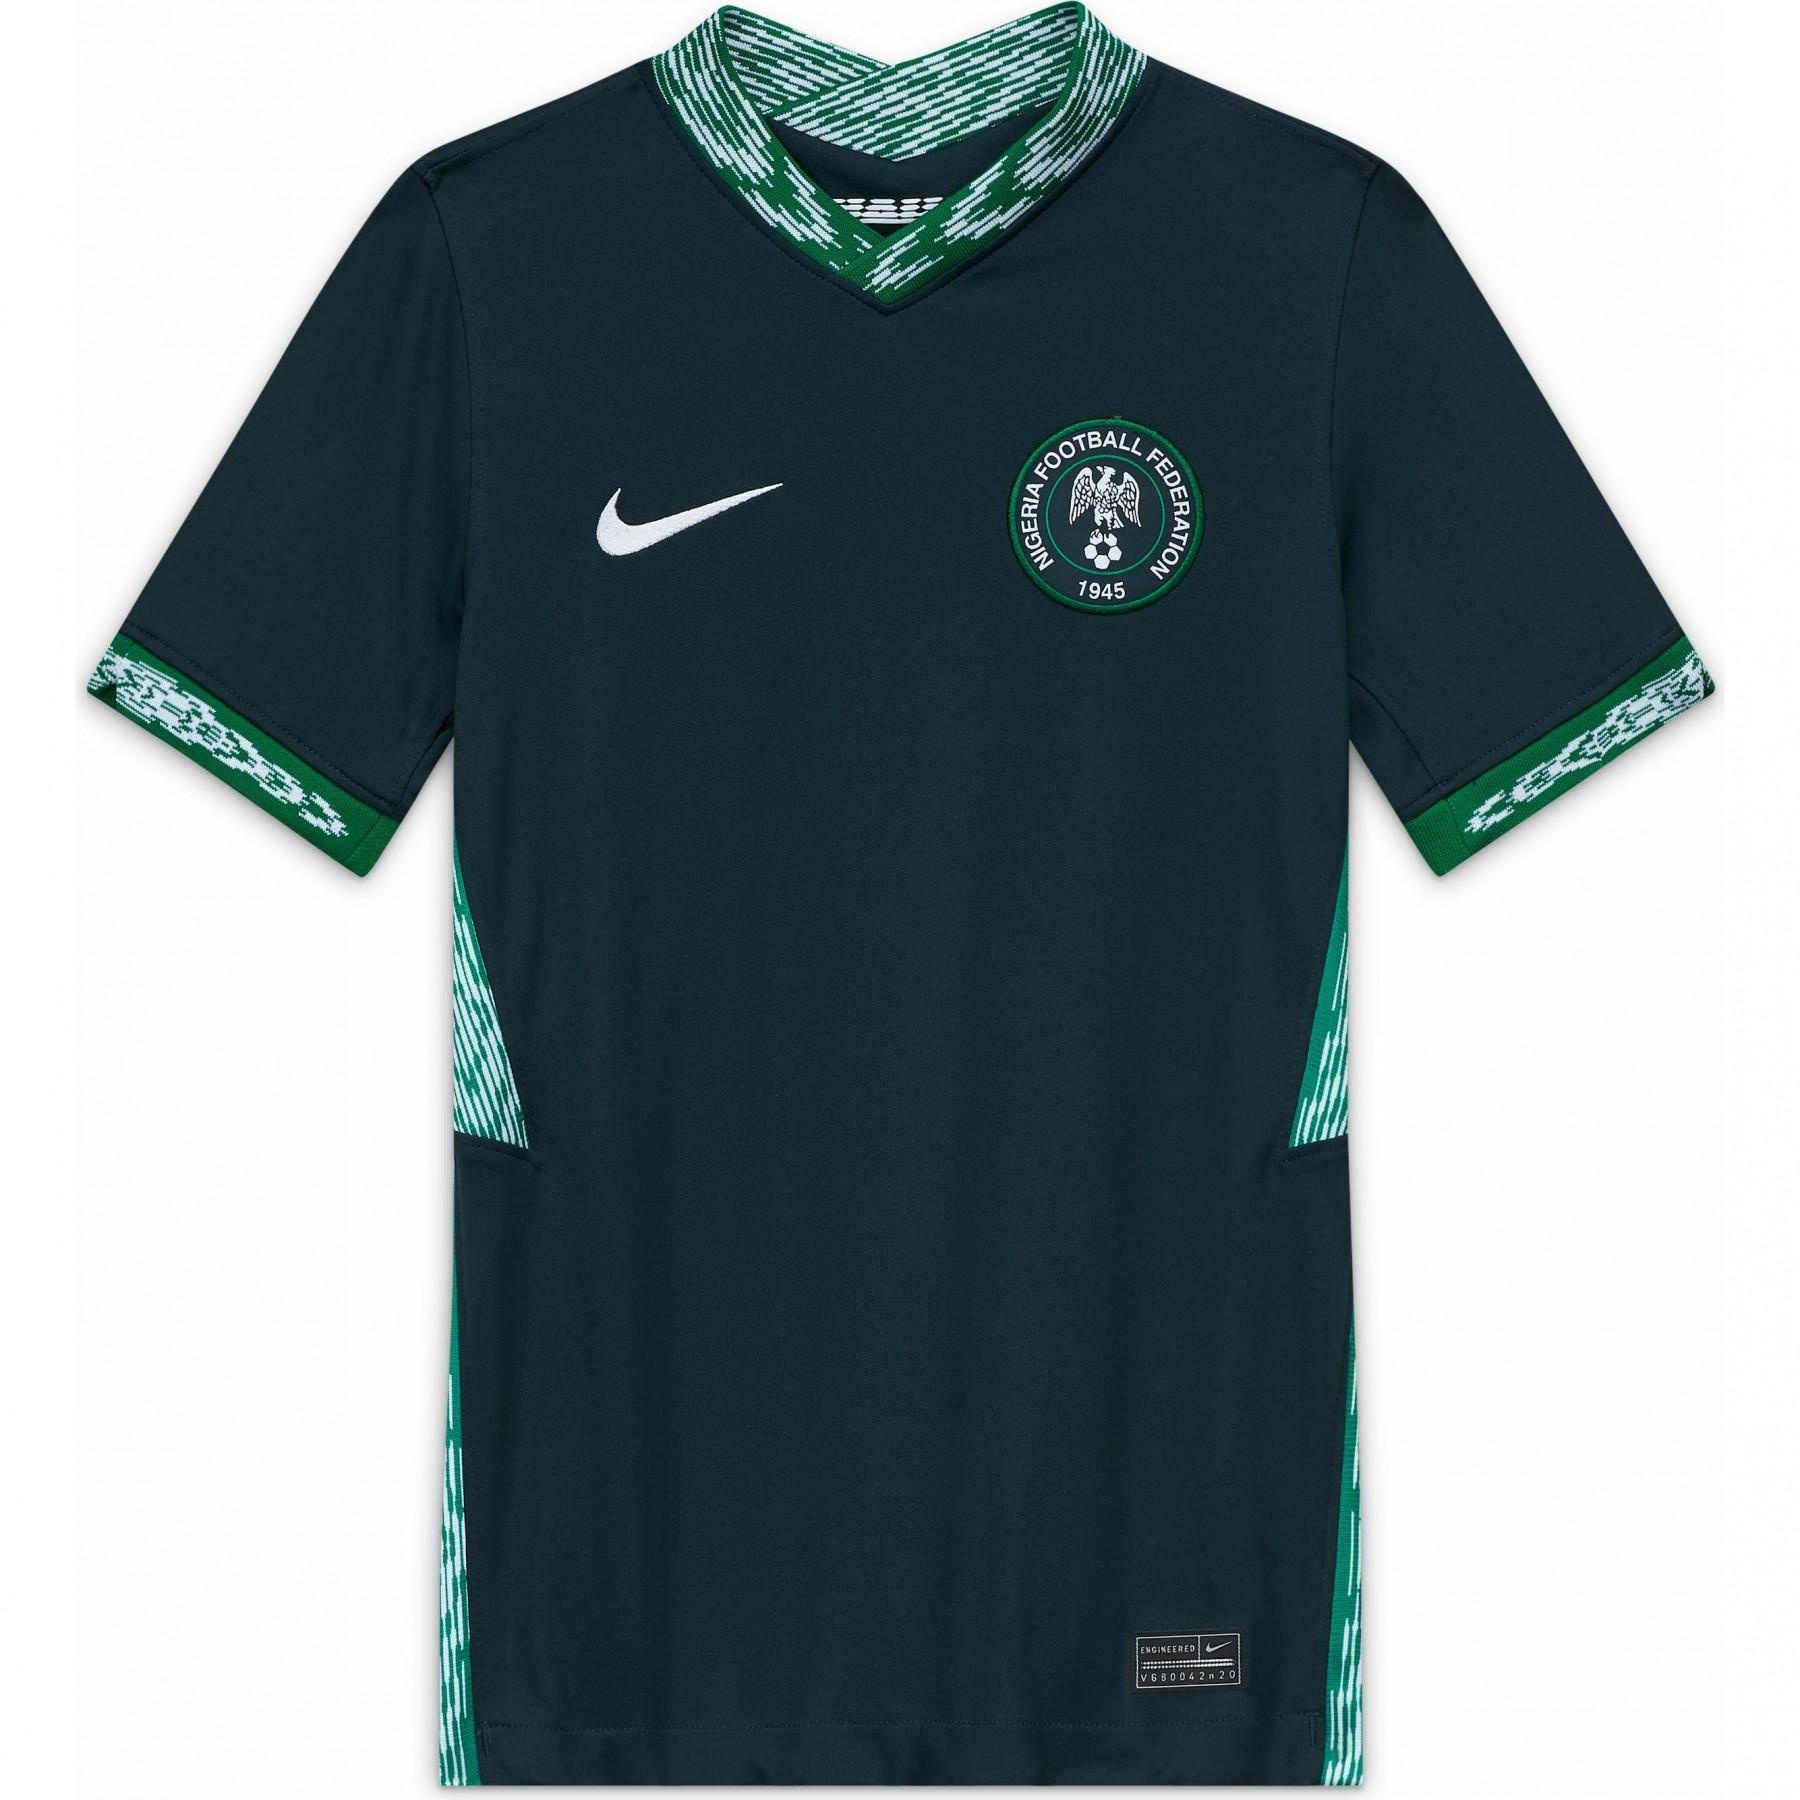 Children's outdoor jersey Nigeria 2020